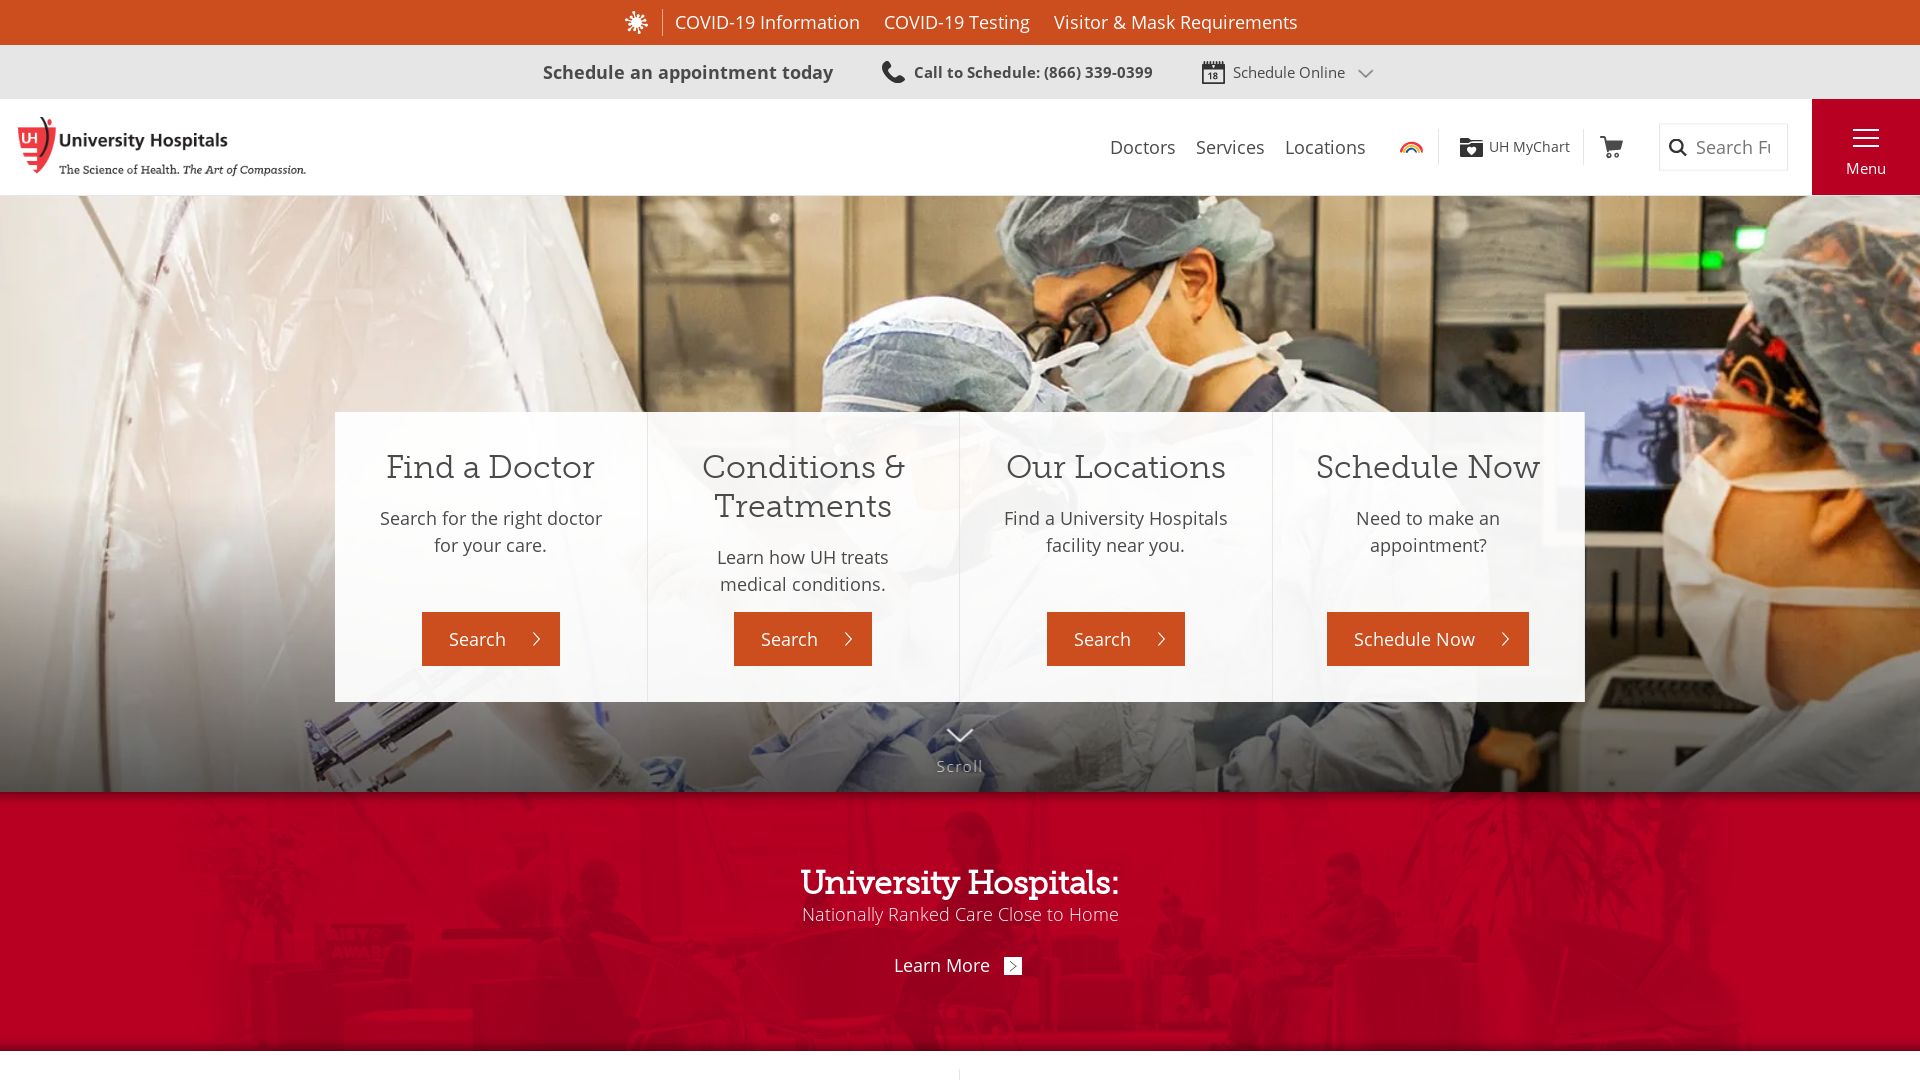 Website status uhhospitals.org is   ONLINE